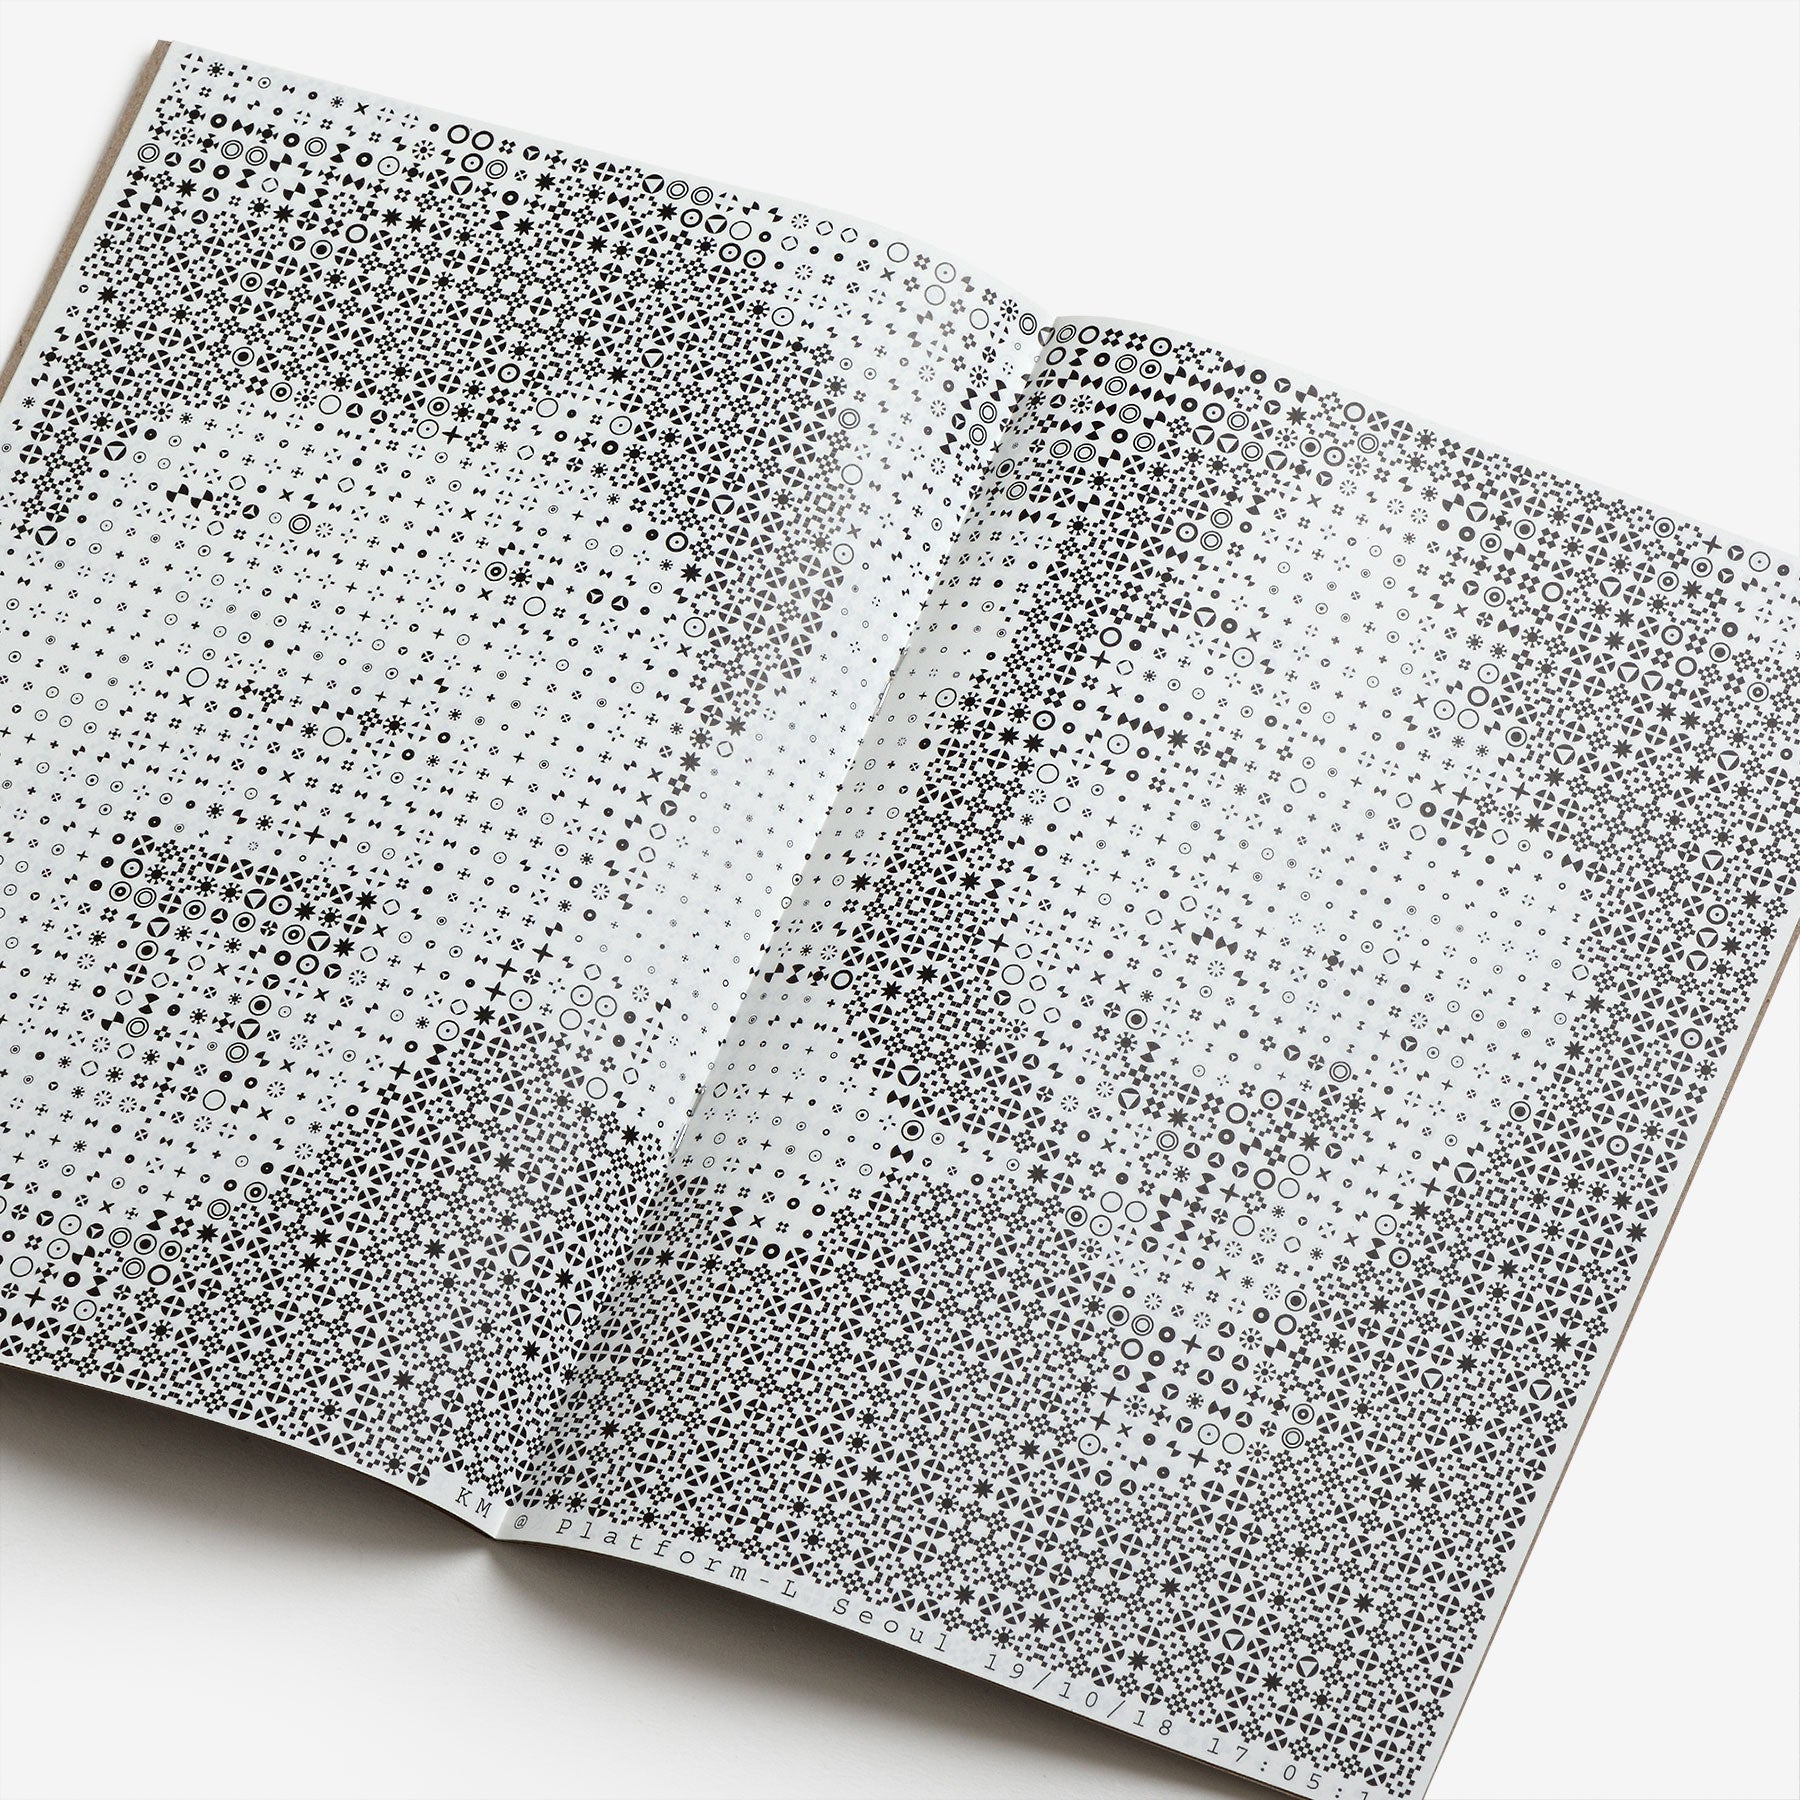 Karel Martens: Tokyo Papers Special Edition